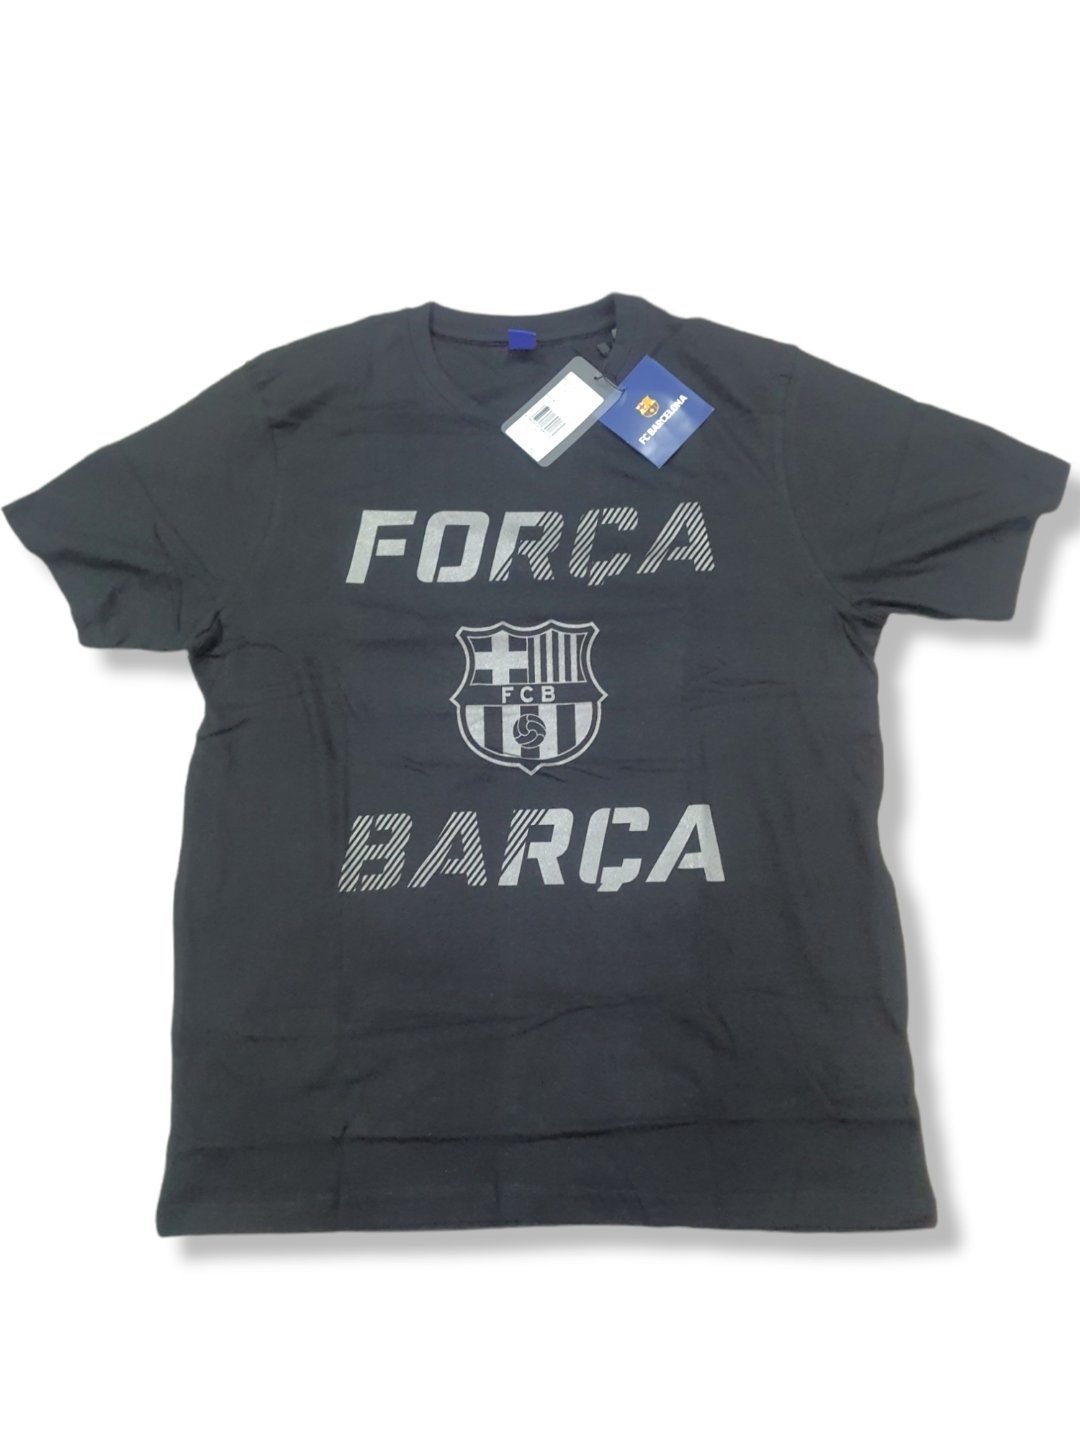 Nike 100% Original FCB official T-shirt including shipping